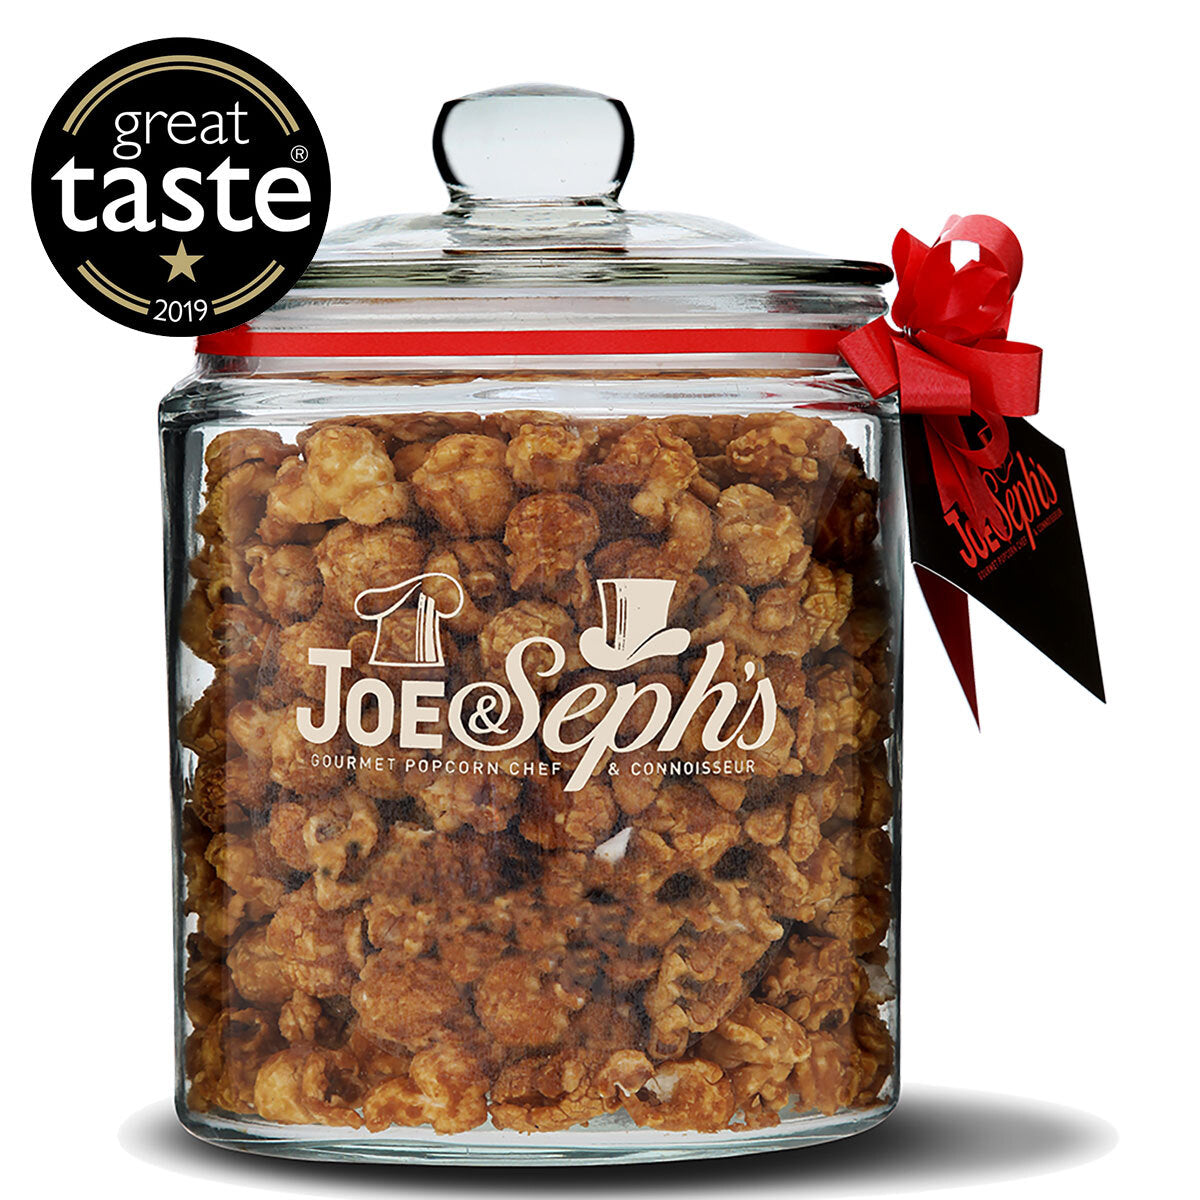 Joe & Seph's Gin & Tonic Gourmet Popcorn Gift Jar, 300g Snacks Costco UK   